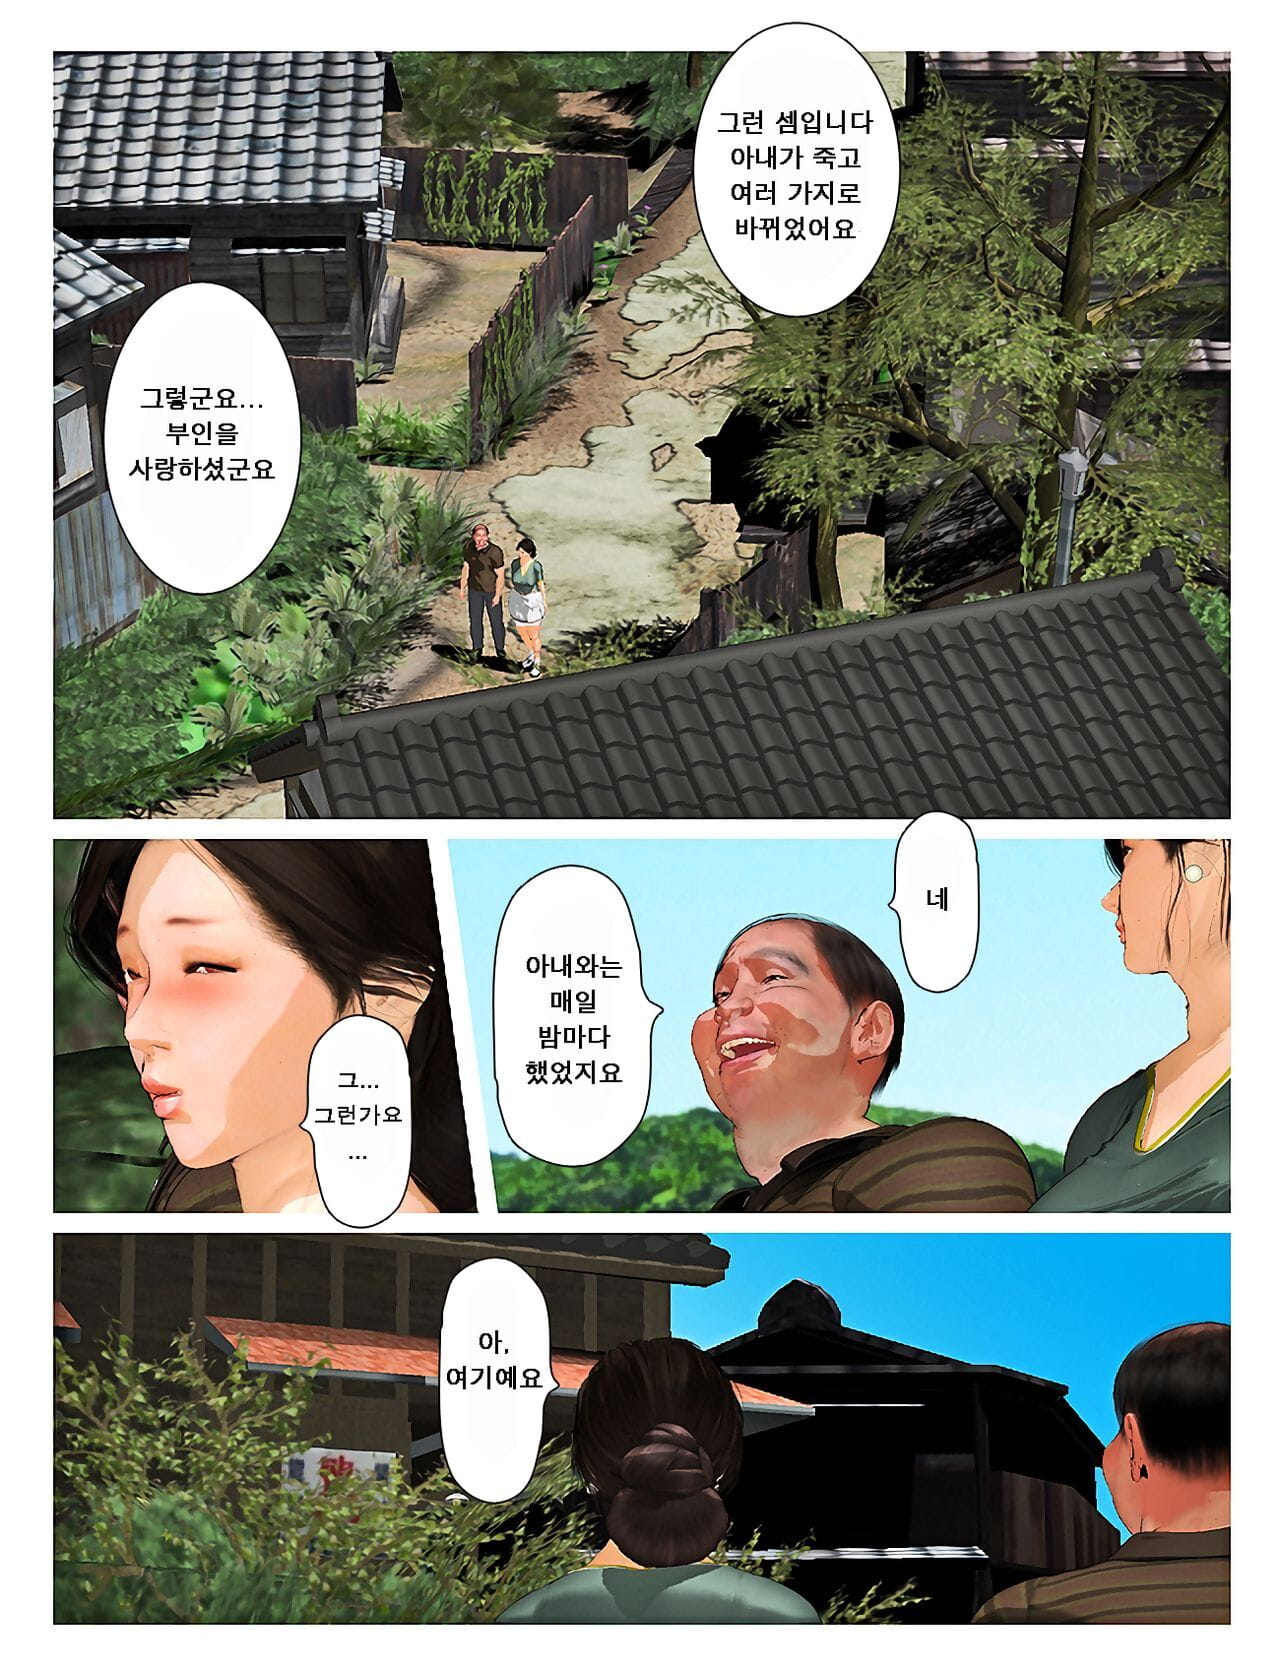 Kyou không misako san 2019:2 오늘의 미사코씨 2019:2 page 1